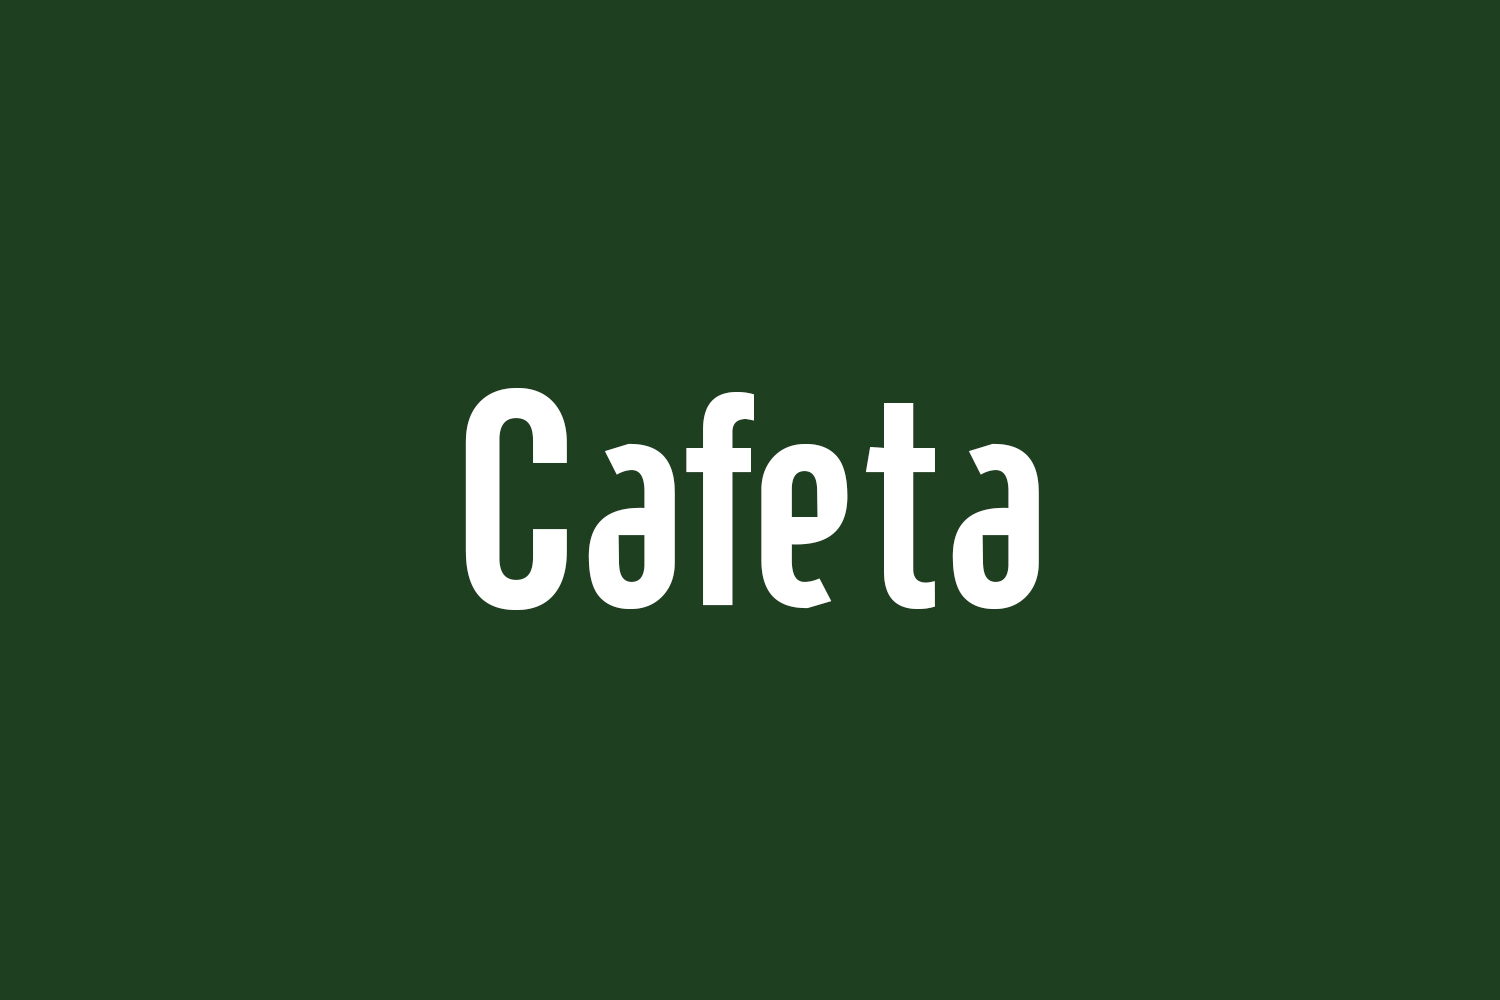 Cafeta Free Font